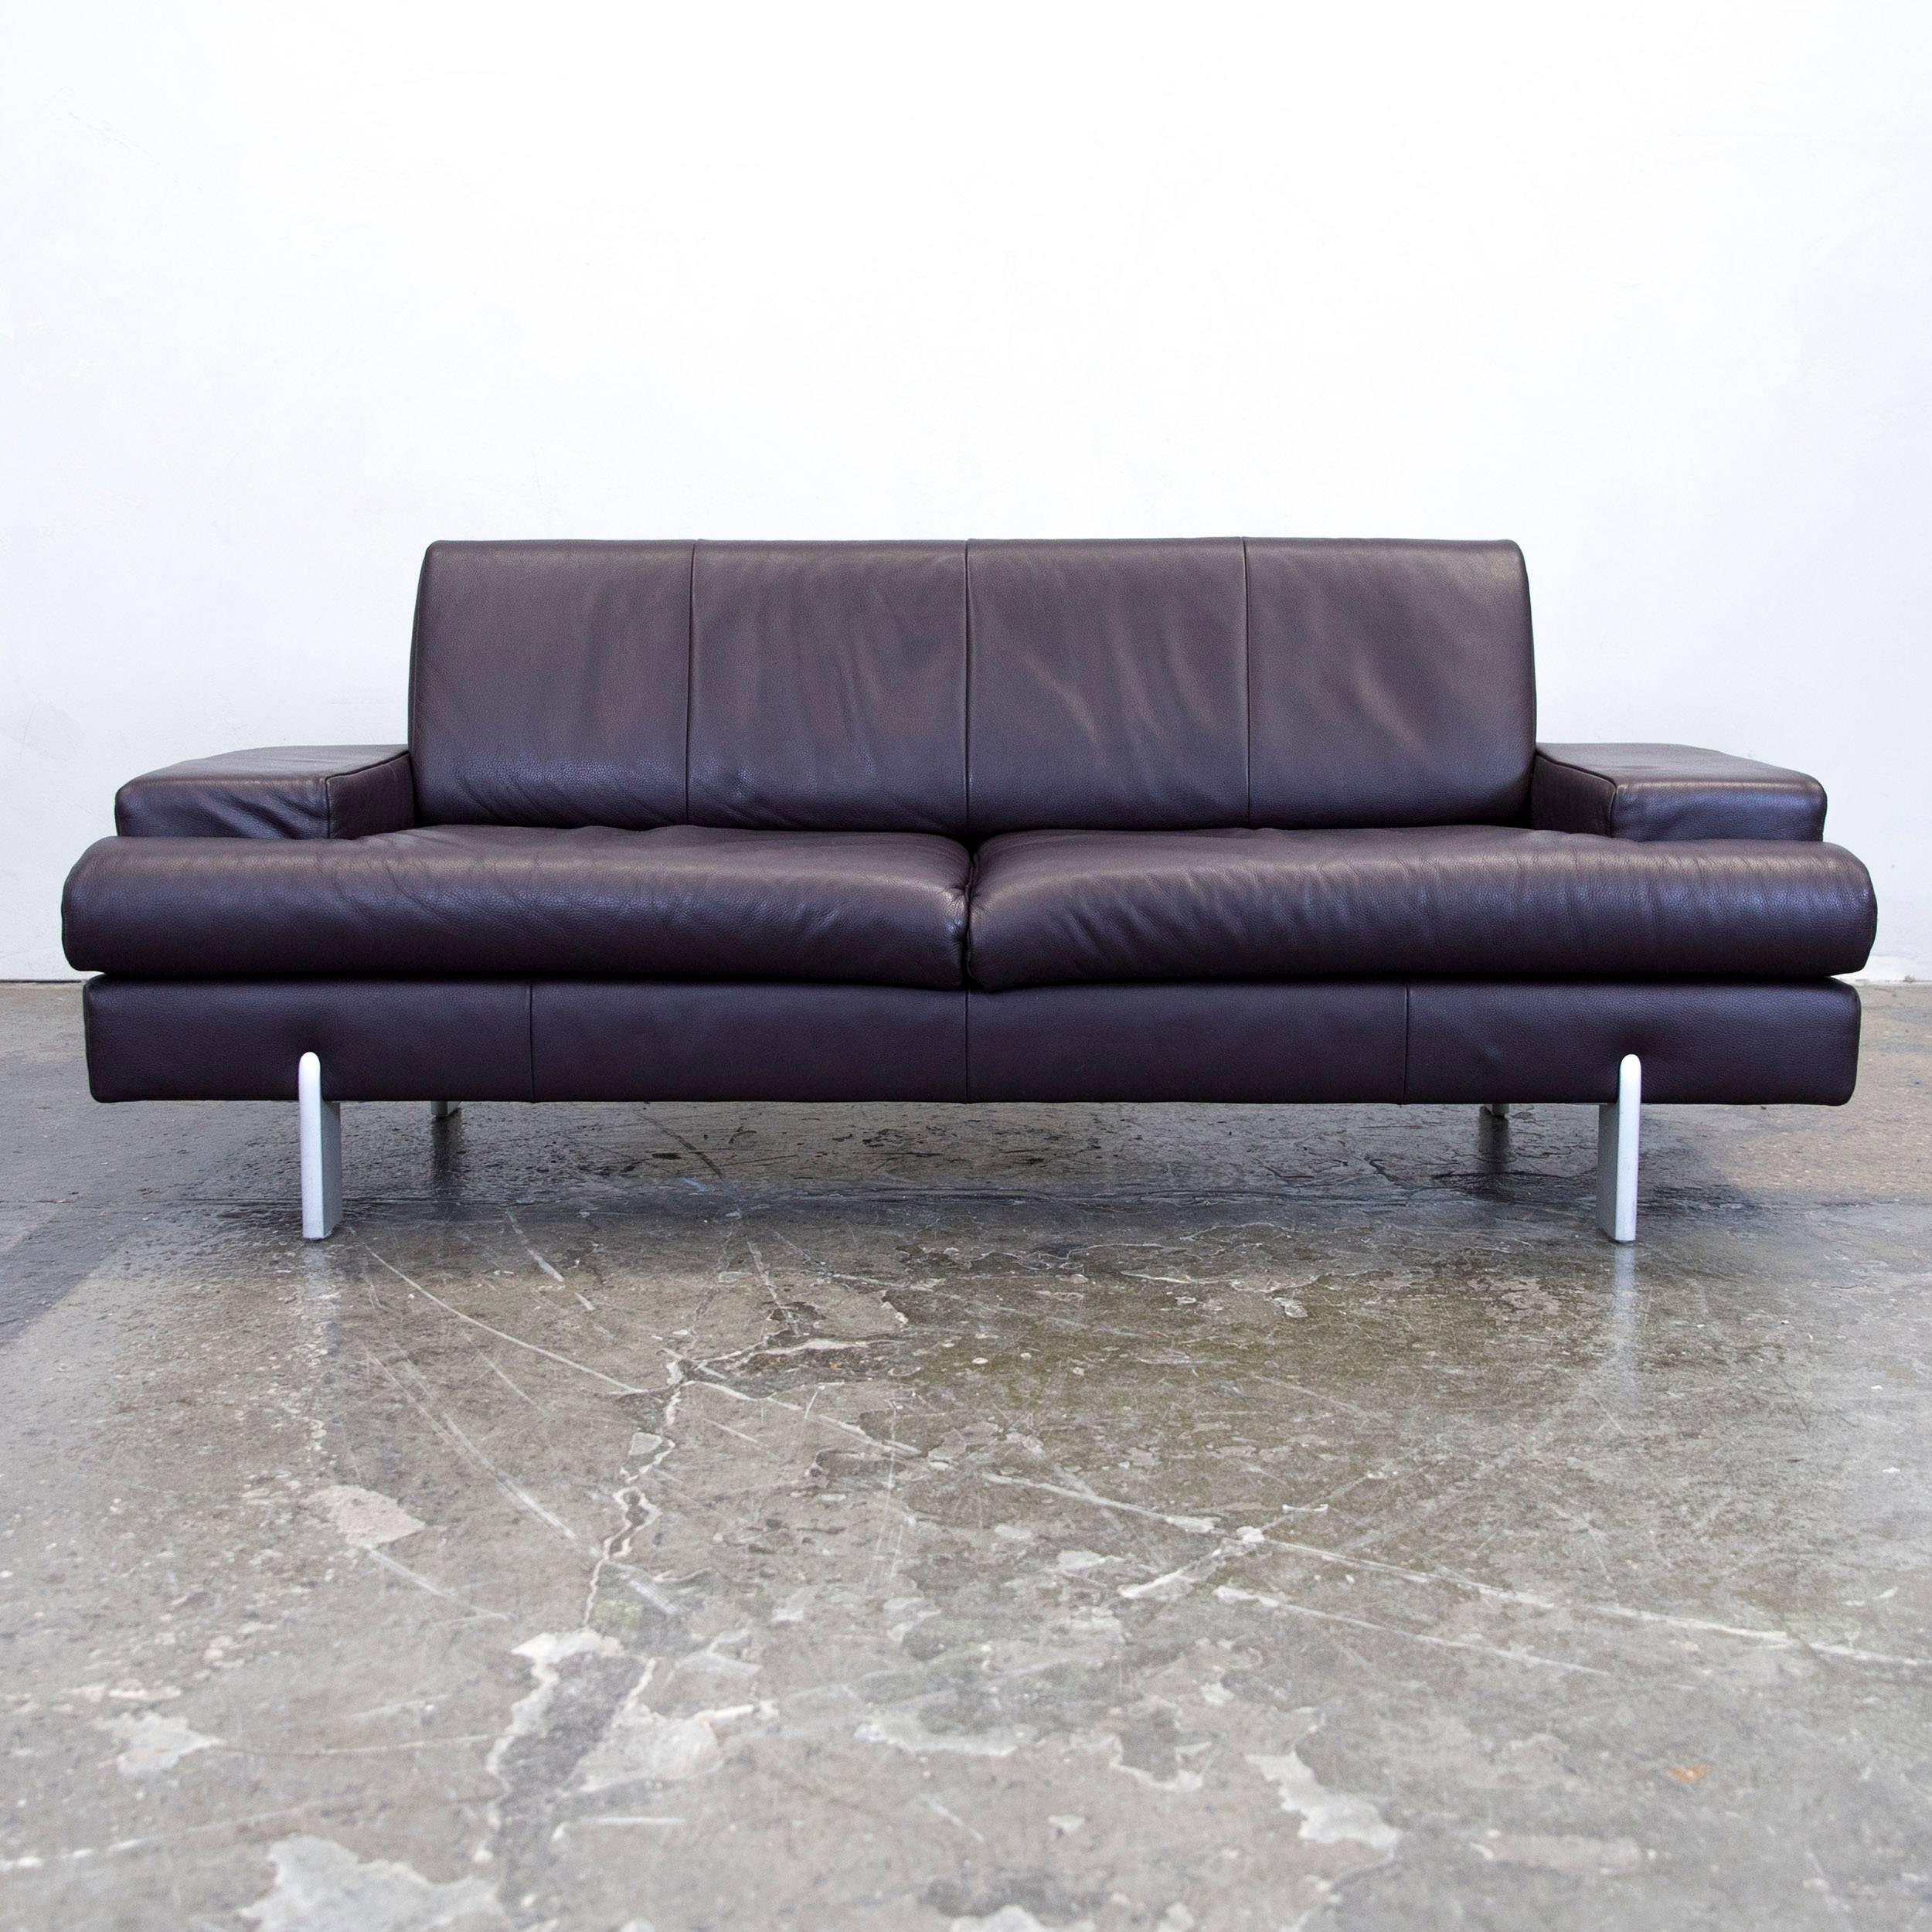 Aubergine lilac colored original BMP Rolf Benz designer leather sofa in a minimalistic and modern design.